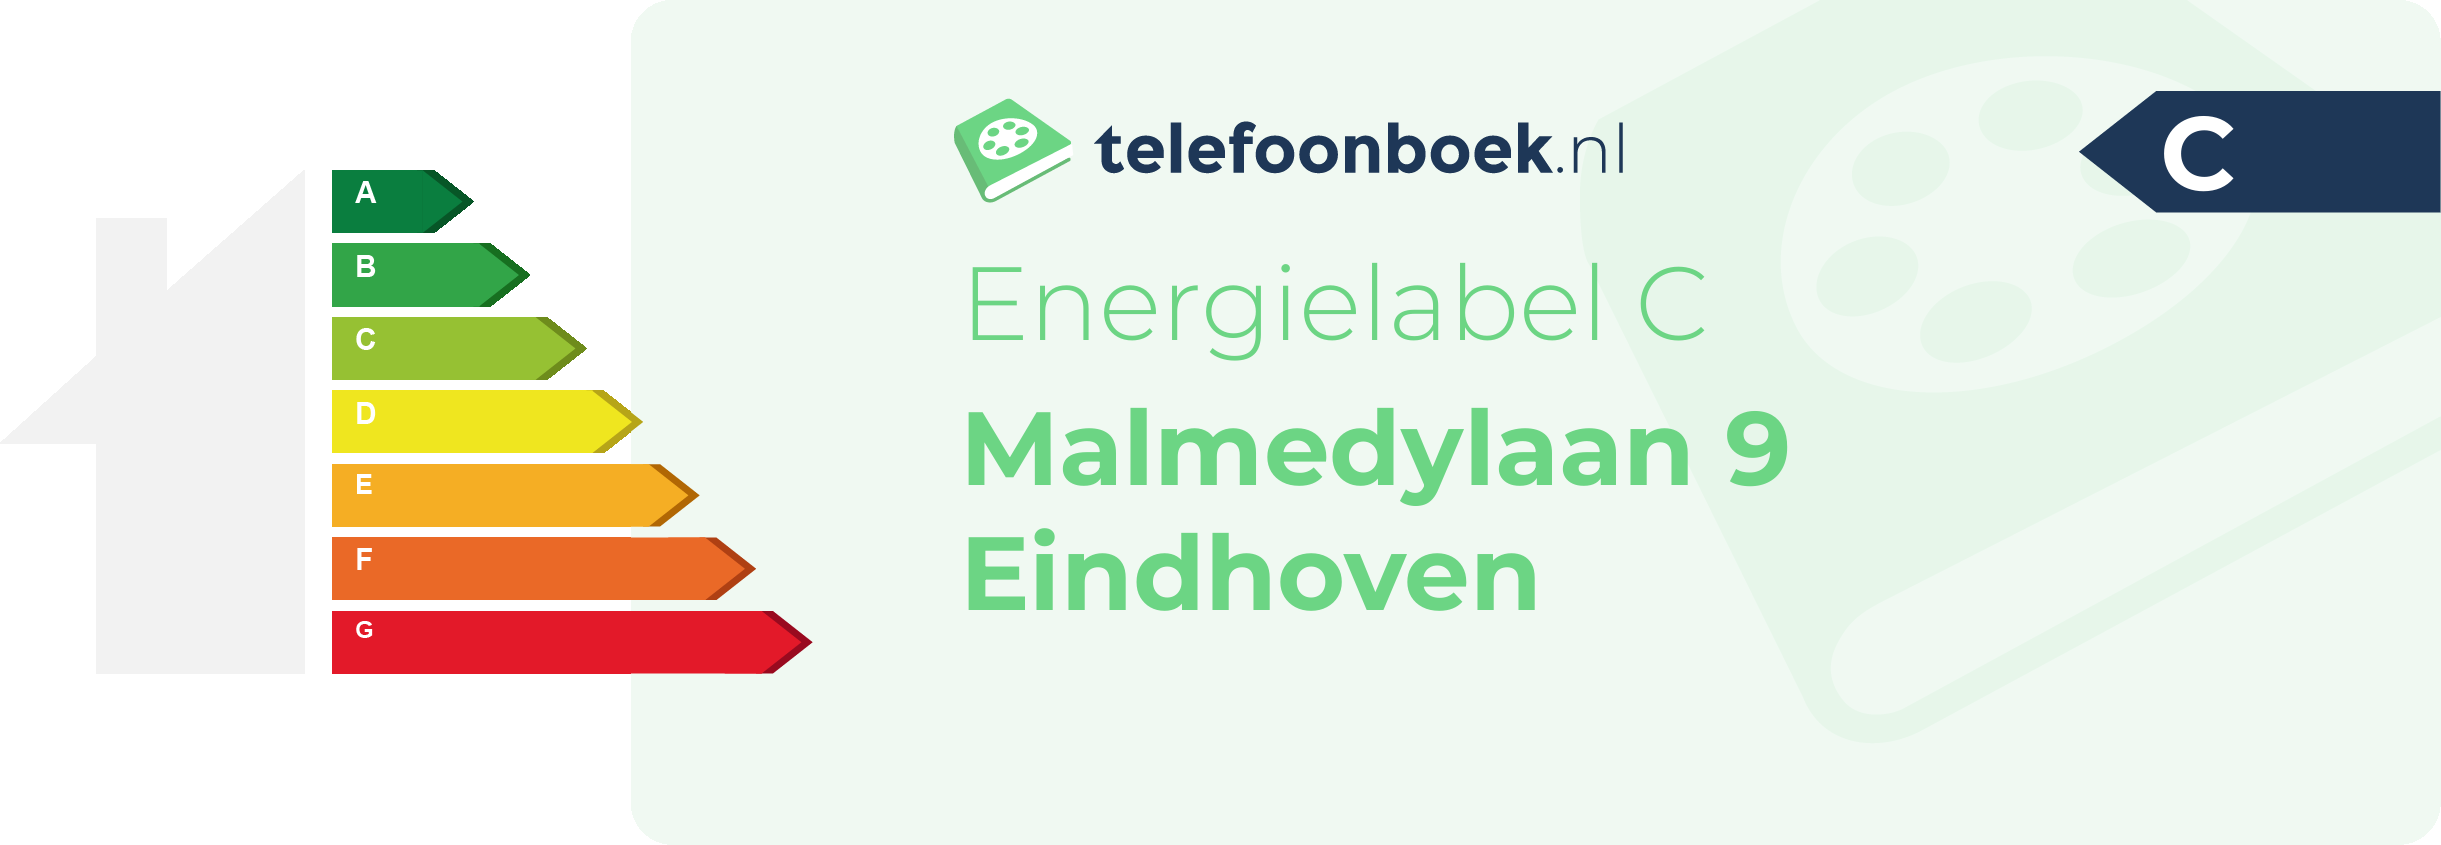 Energielabel Malmedylaan 9 Eindhoven